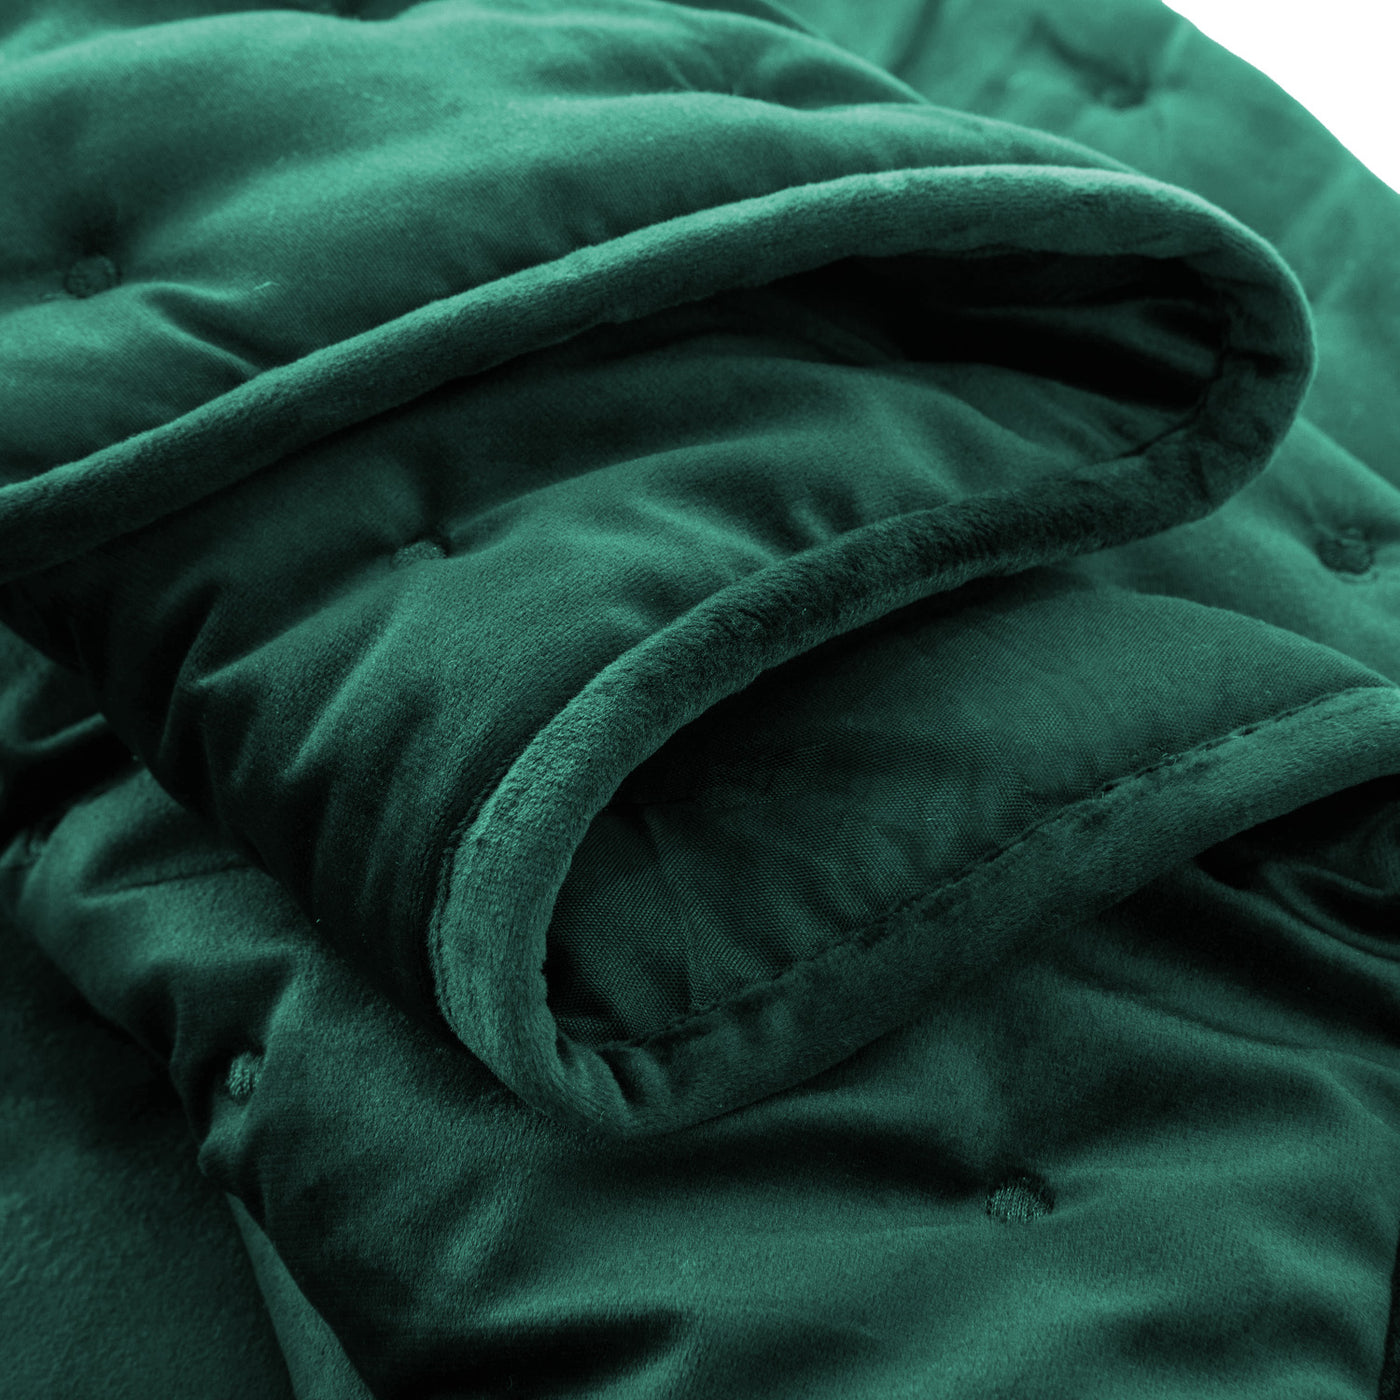 Green Crushed Velvet Bedspread Set & Matching Eyelet Curtain